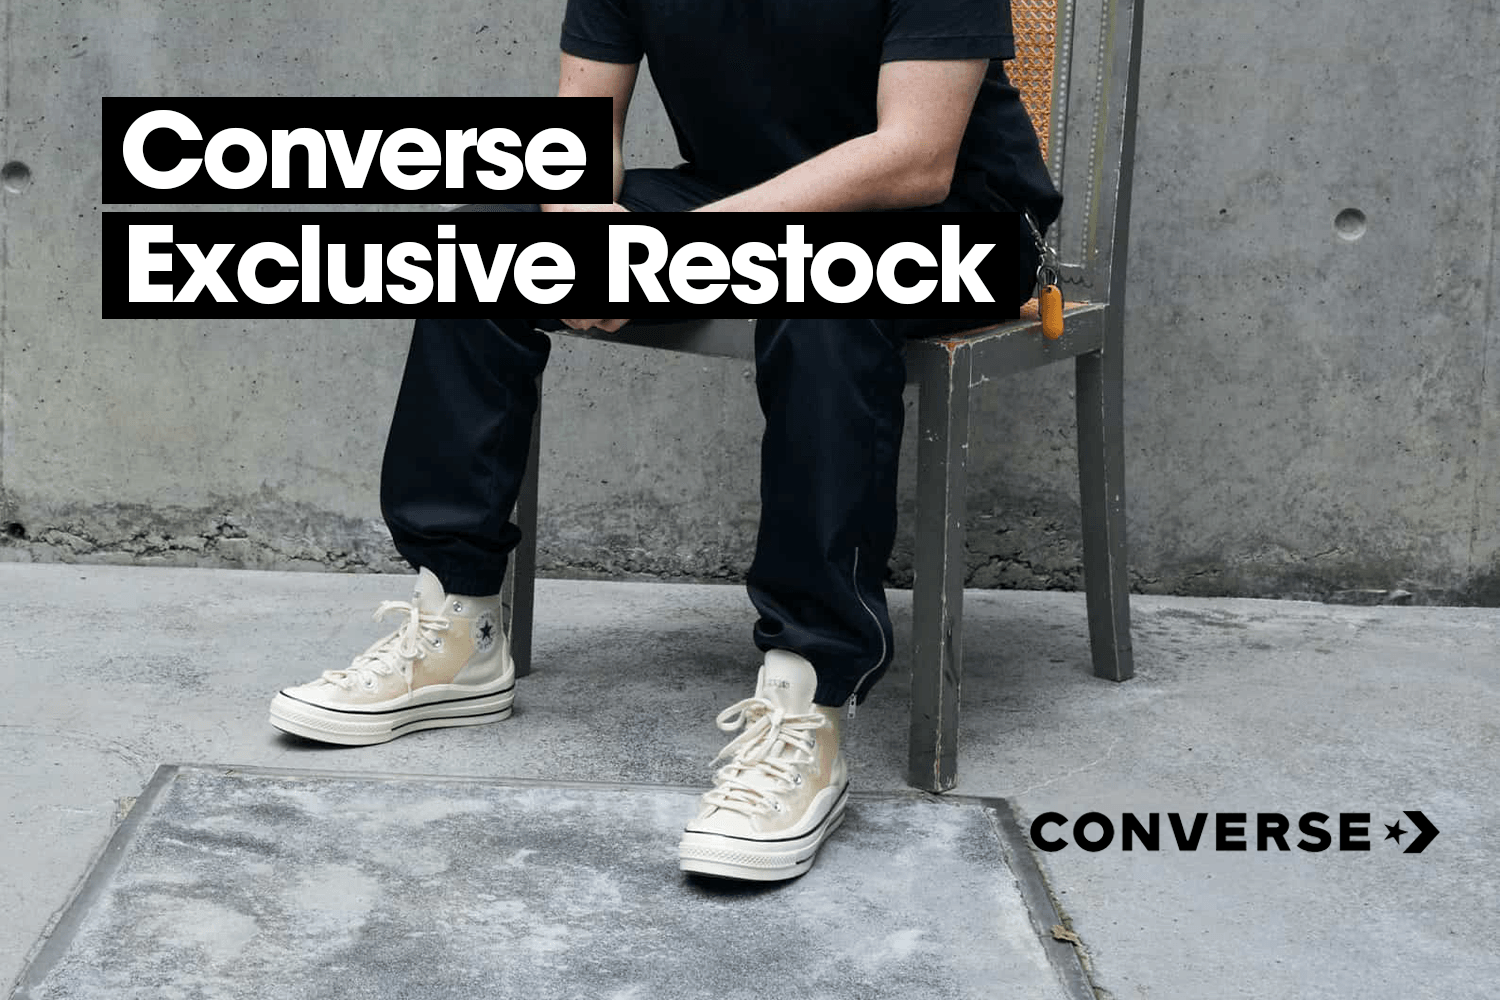 Een grote limited edition restock bij Converse